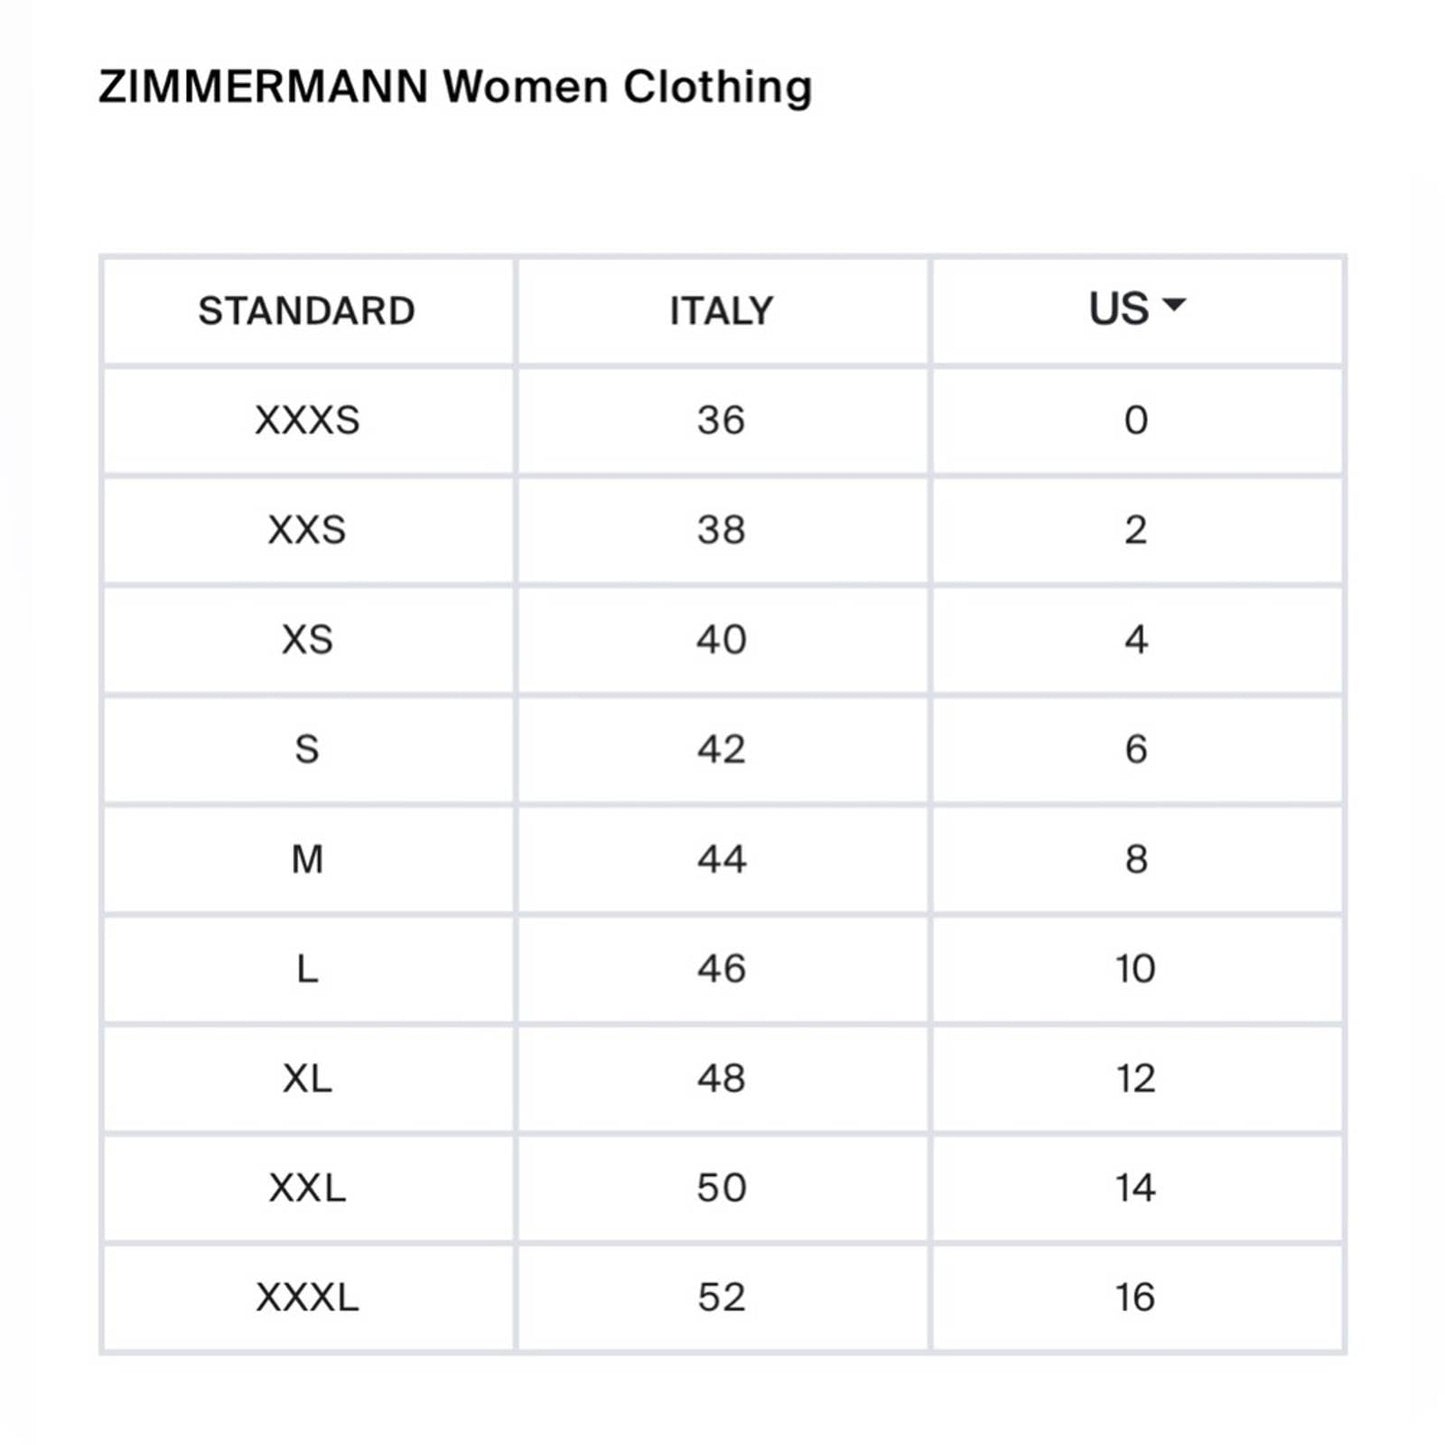 Zimmerman Corsage Linear Bikini White 2pc High Waist Swimsuit 4-6